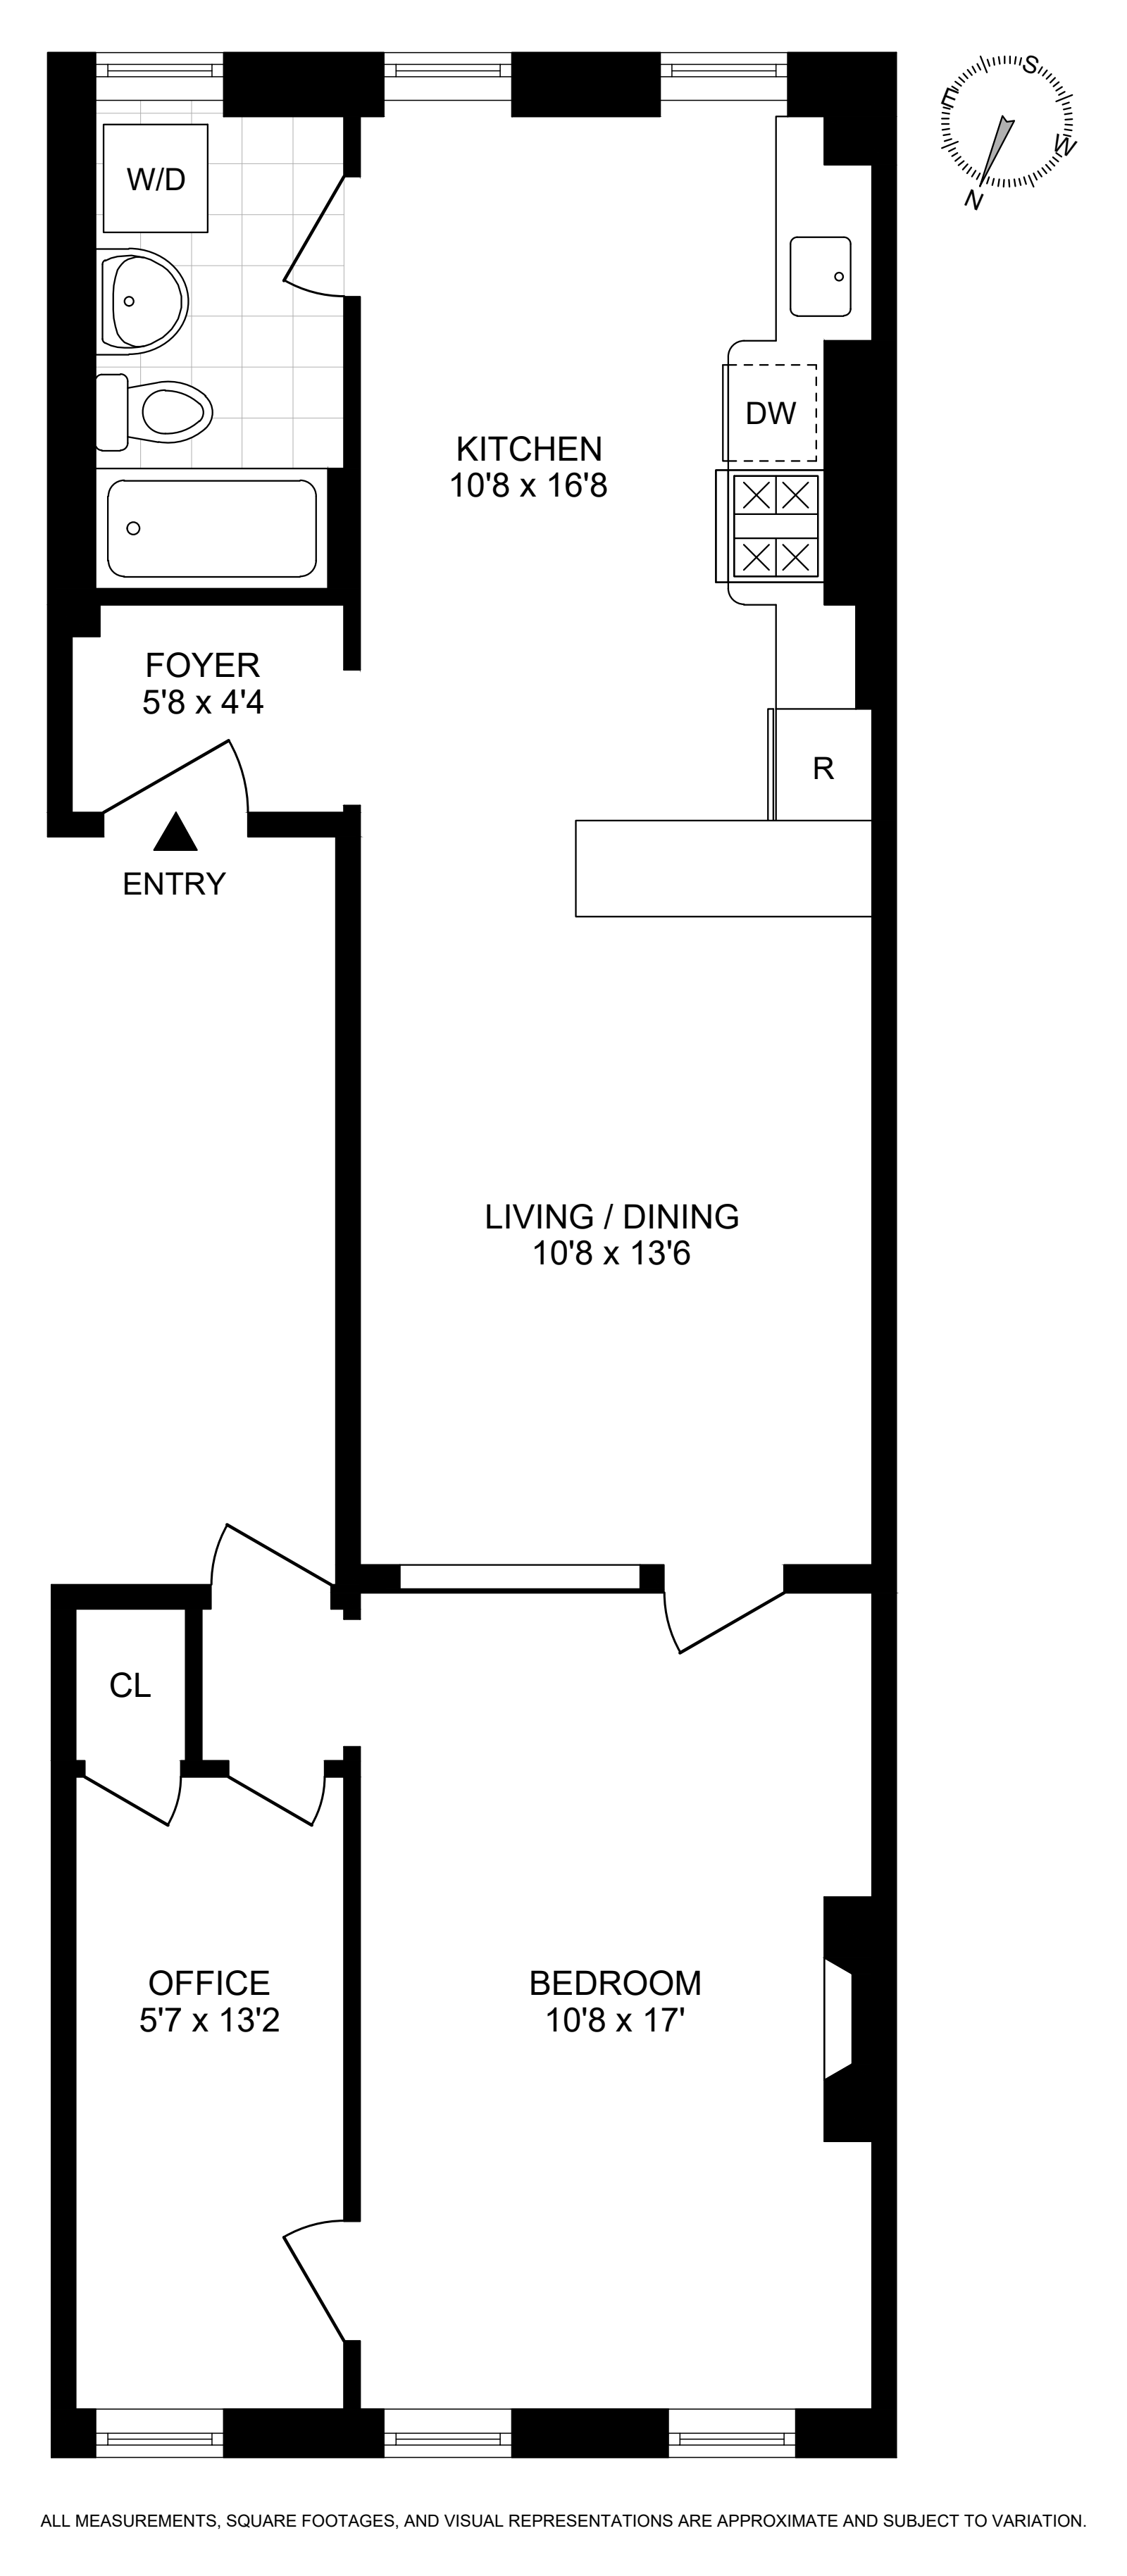 Floorplan for 217 Smith Street, 2